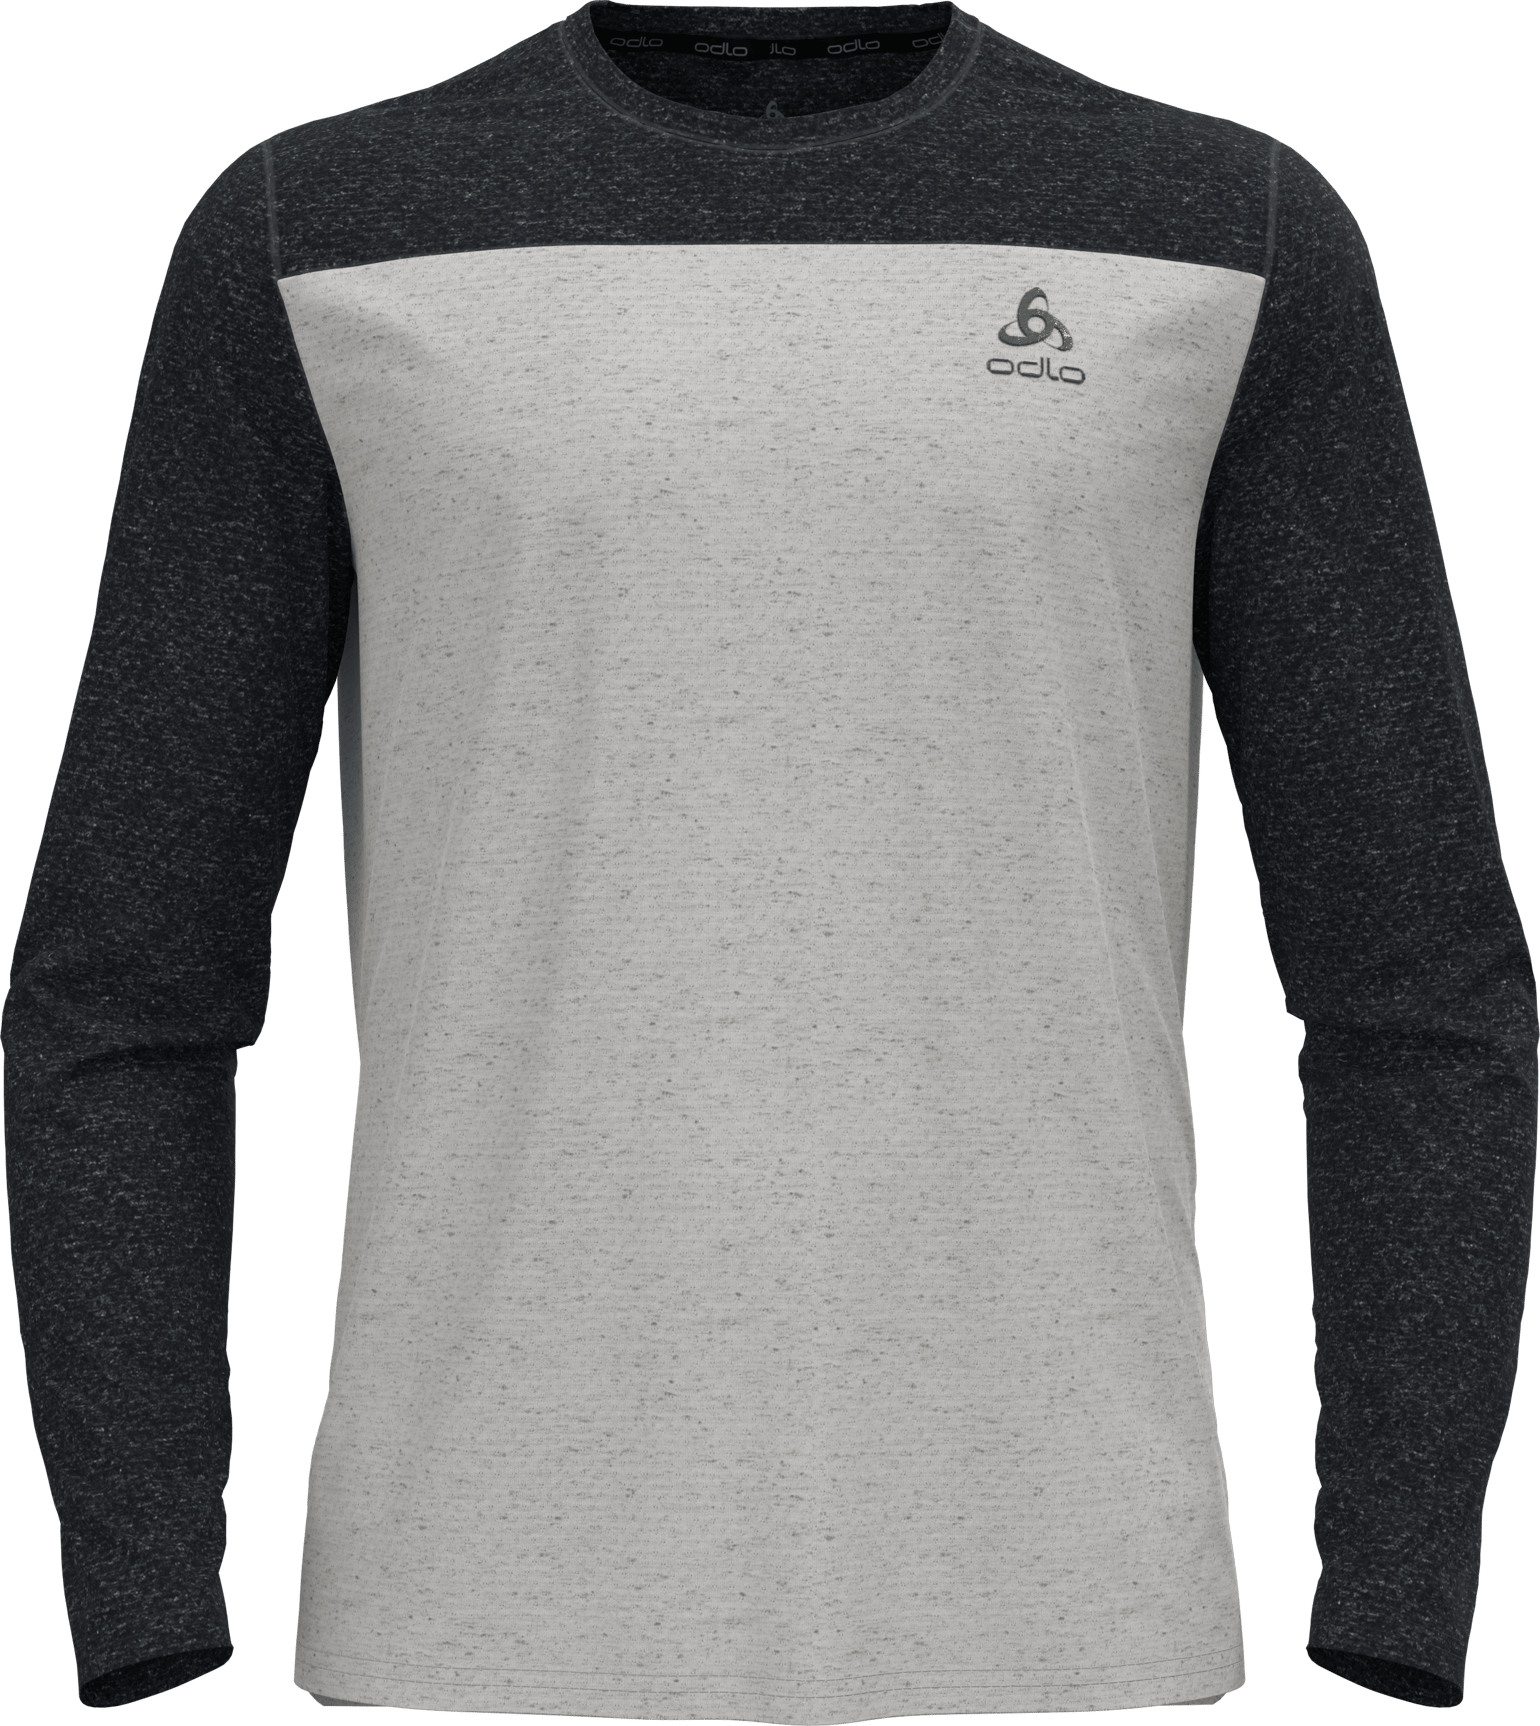 Odlo Men's T-shirt Crew Neck L/S X-Alp Linencool Black/Odlo Concrete Grey